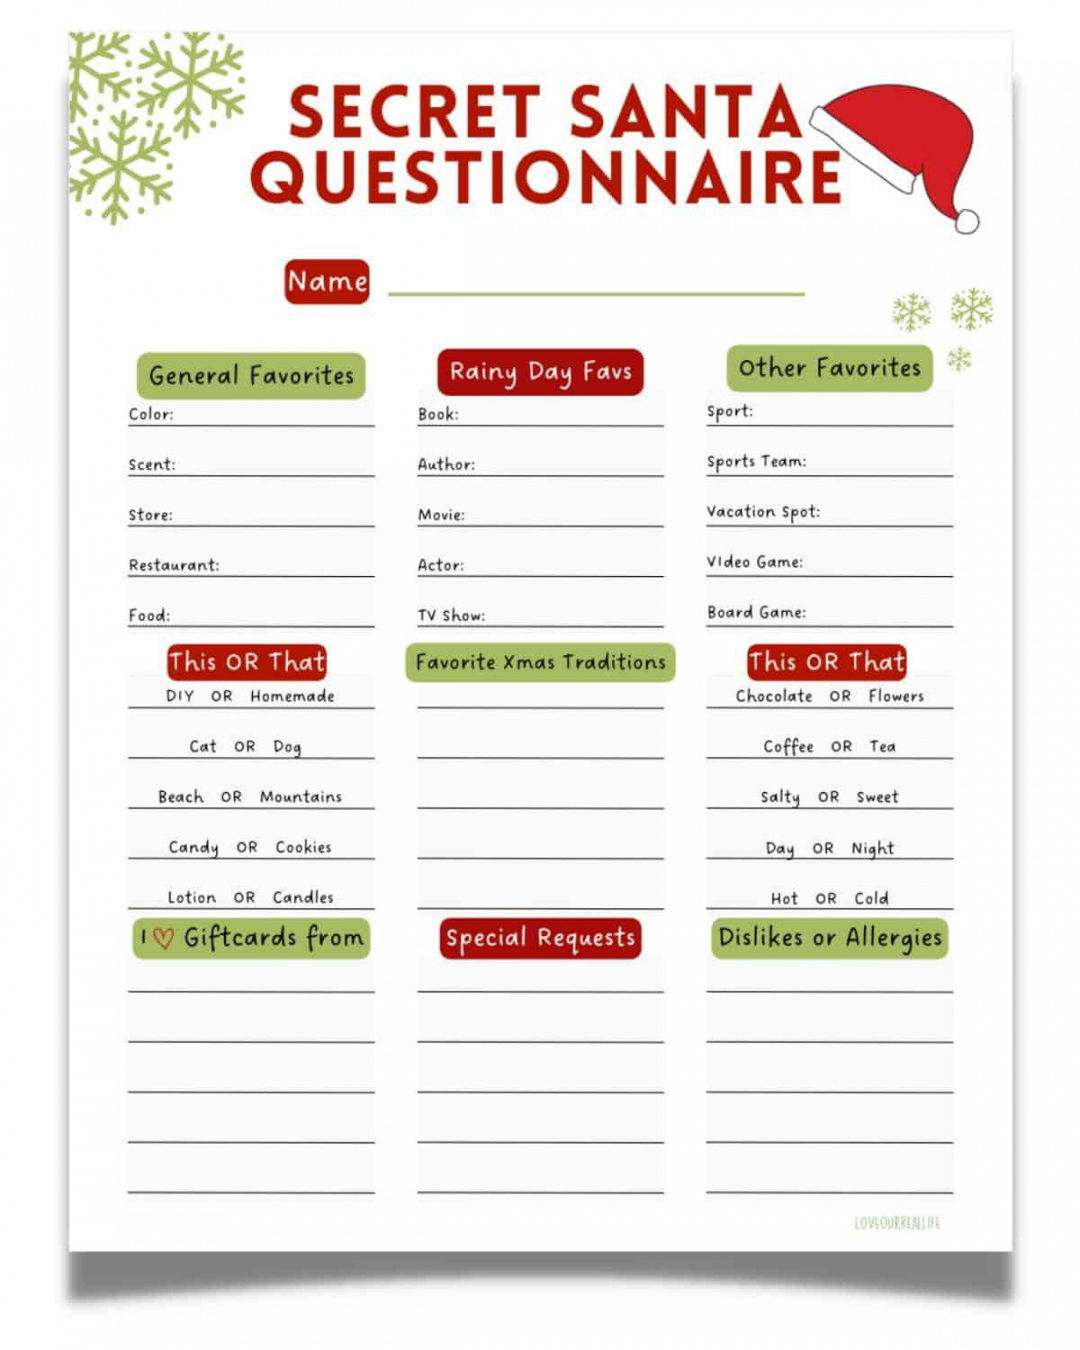 Free Printable Secret Santa Template - Printable - FREE Secret Santa Questionnaire Printable Templates ⋆ Love Our